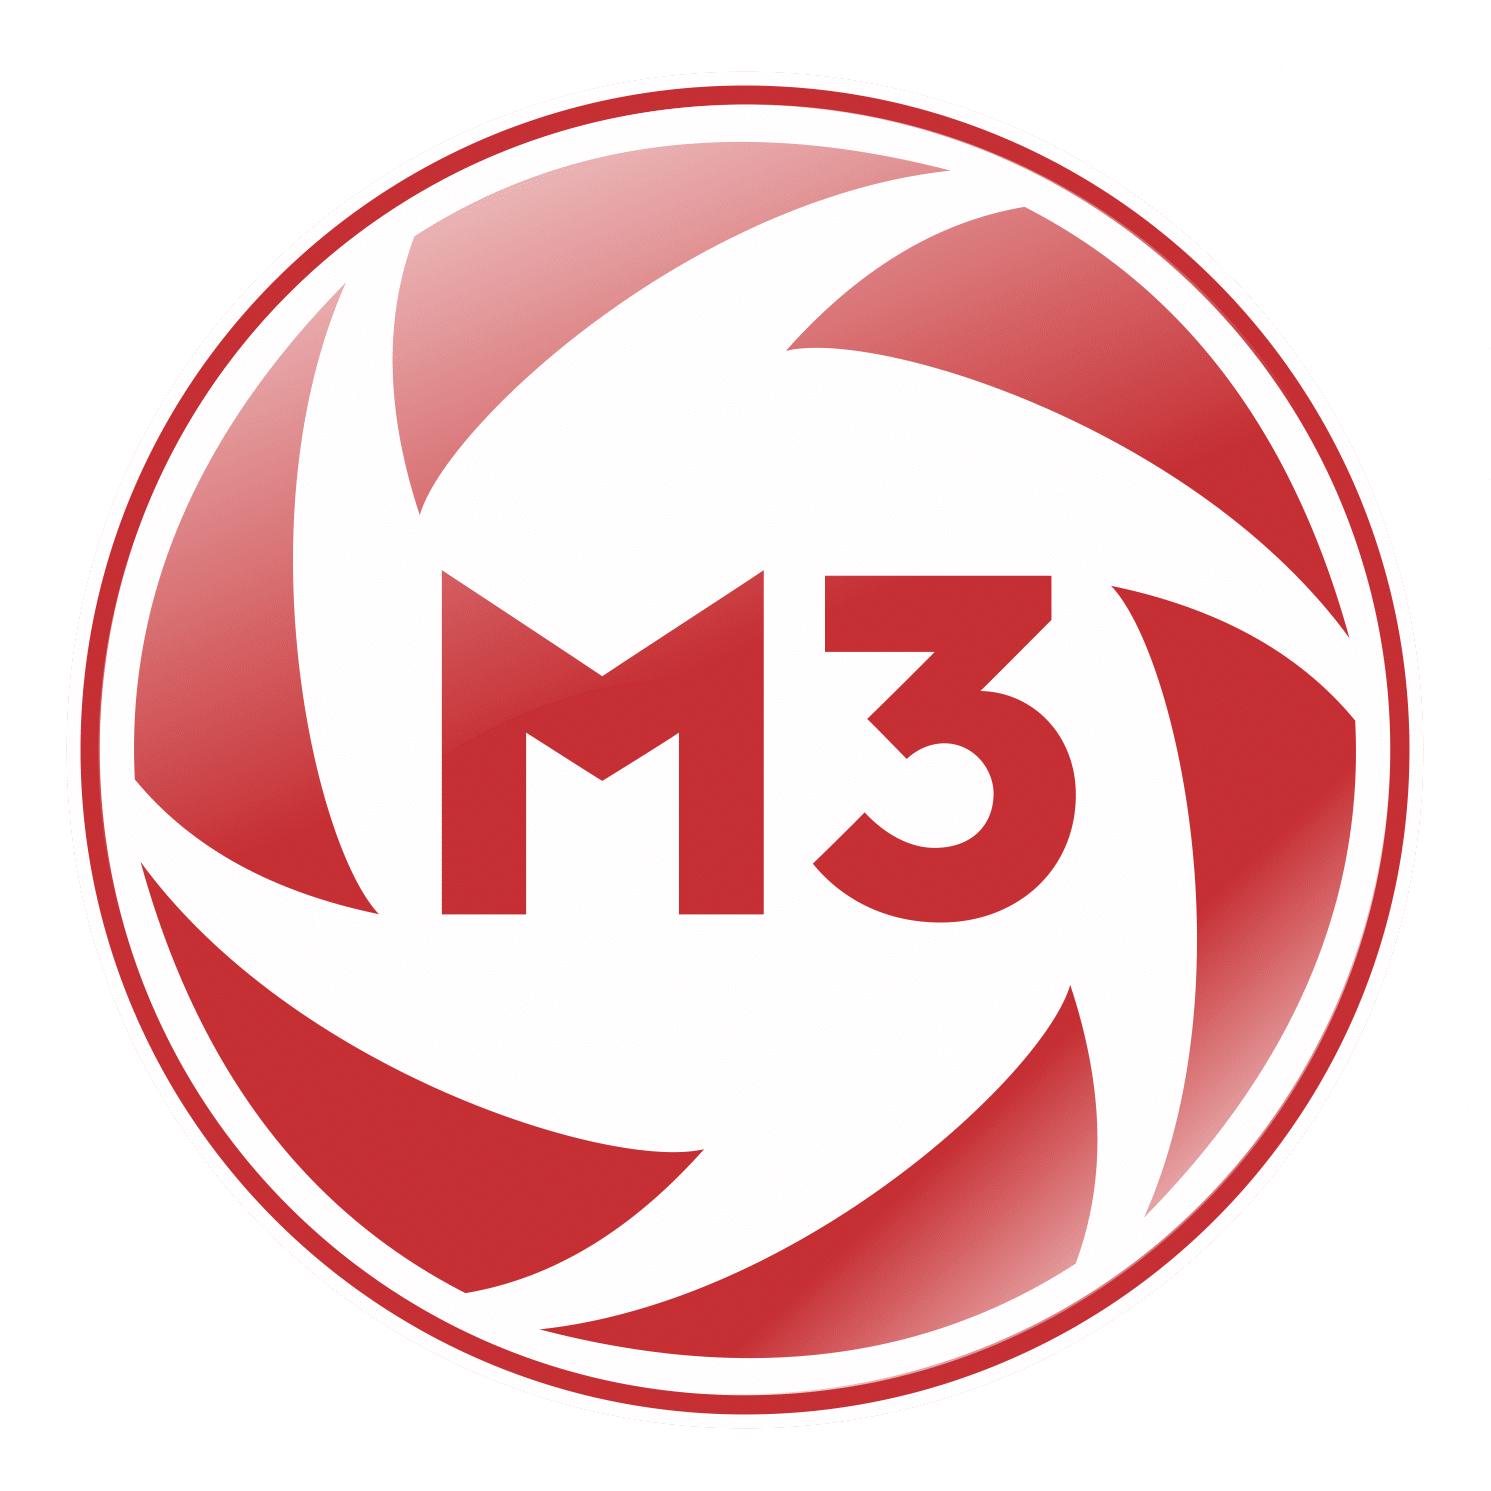 M3 Produtora – Amazon Rekognition